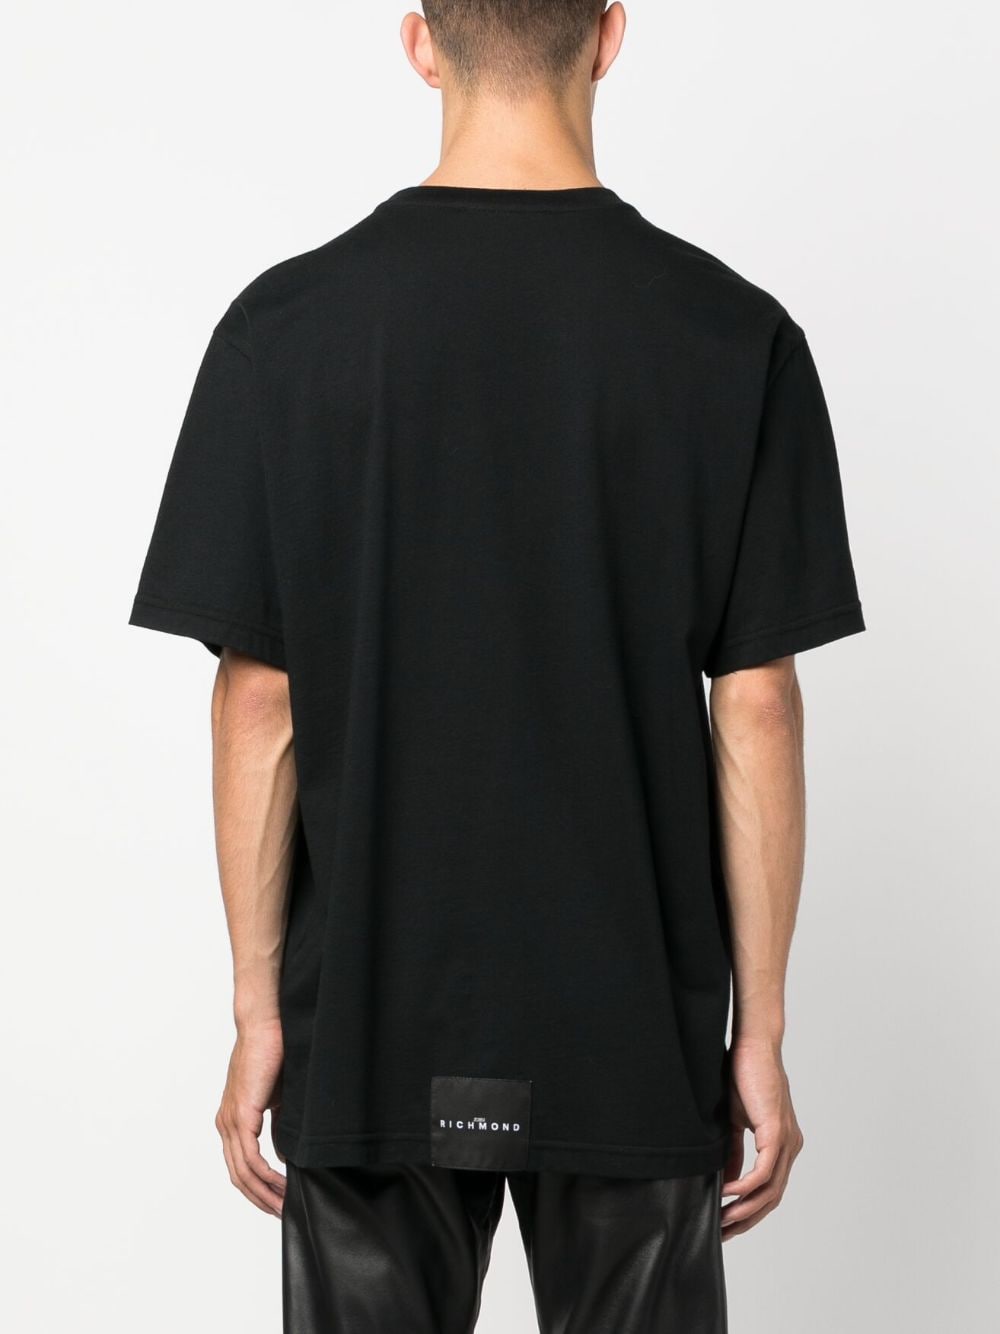 black t-shirt with print